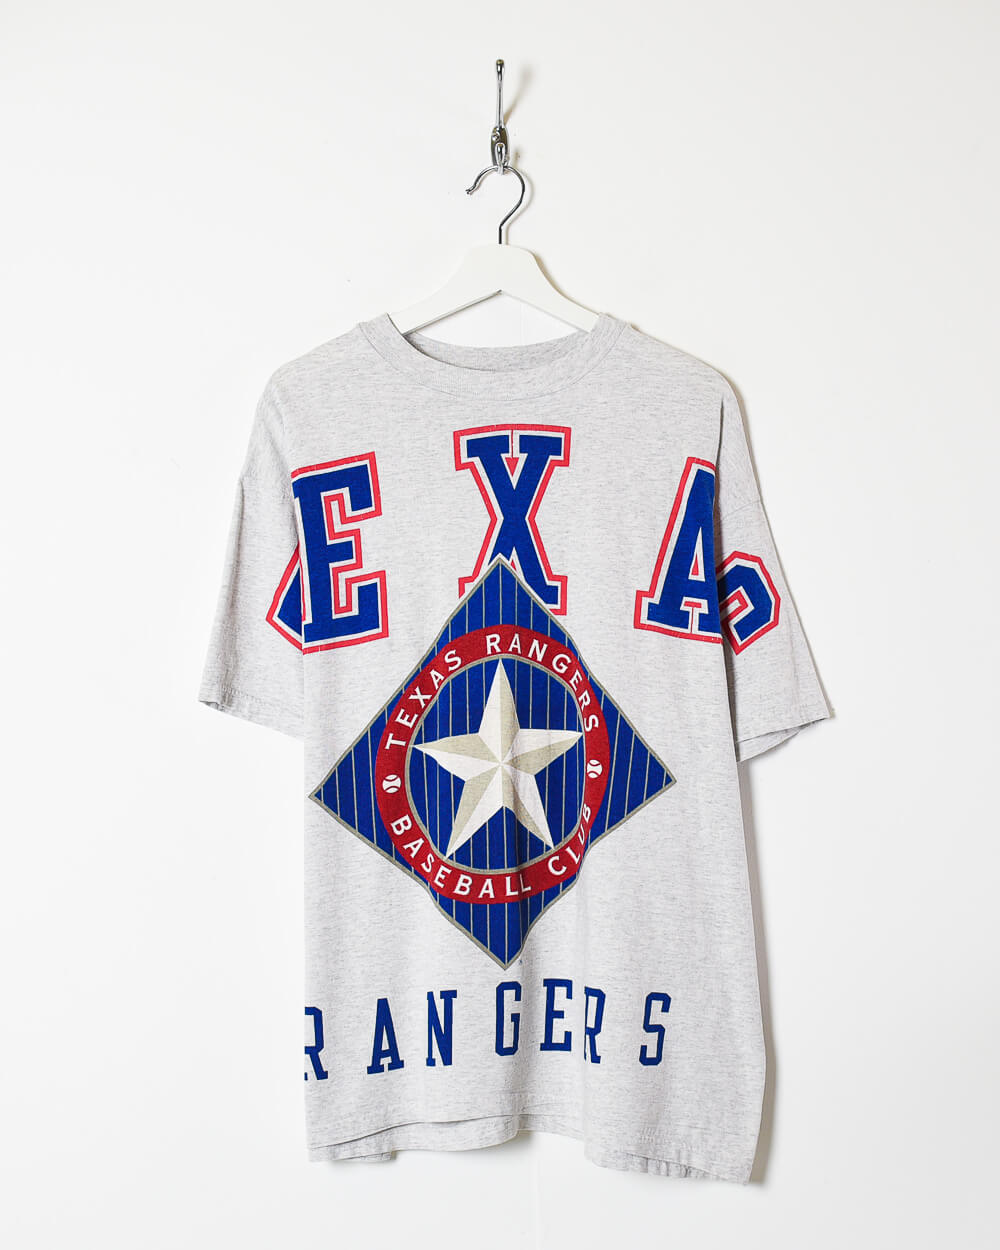 Hanes Texas Rangers Baseball Club T-Shirt - X-Large